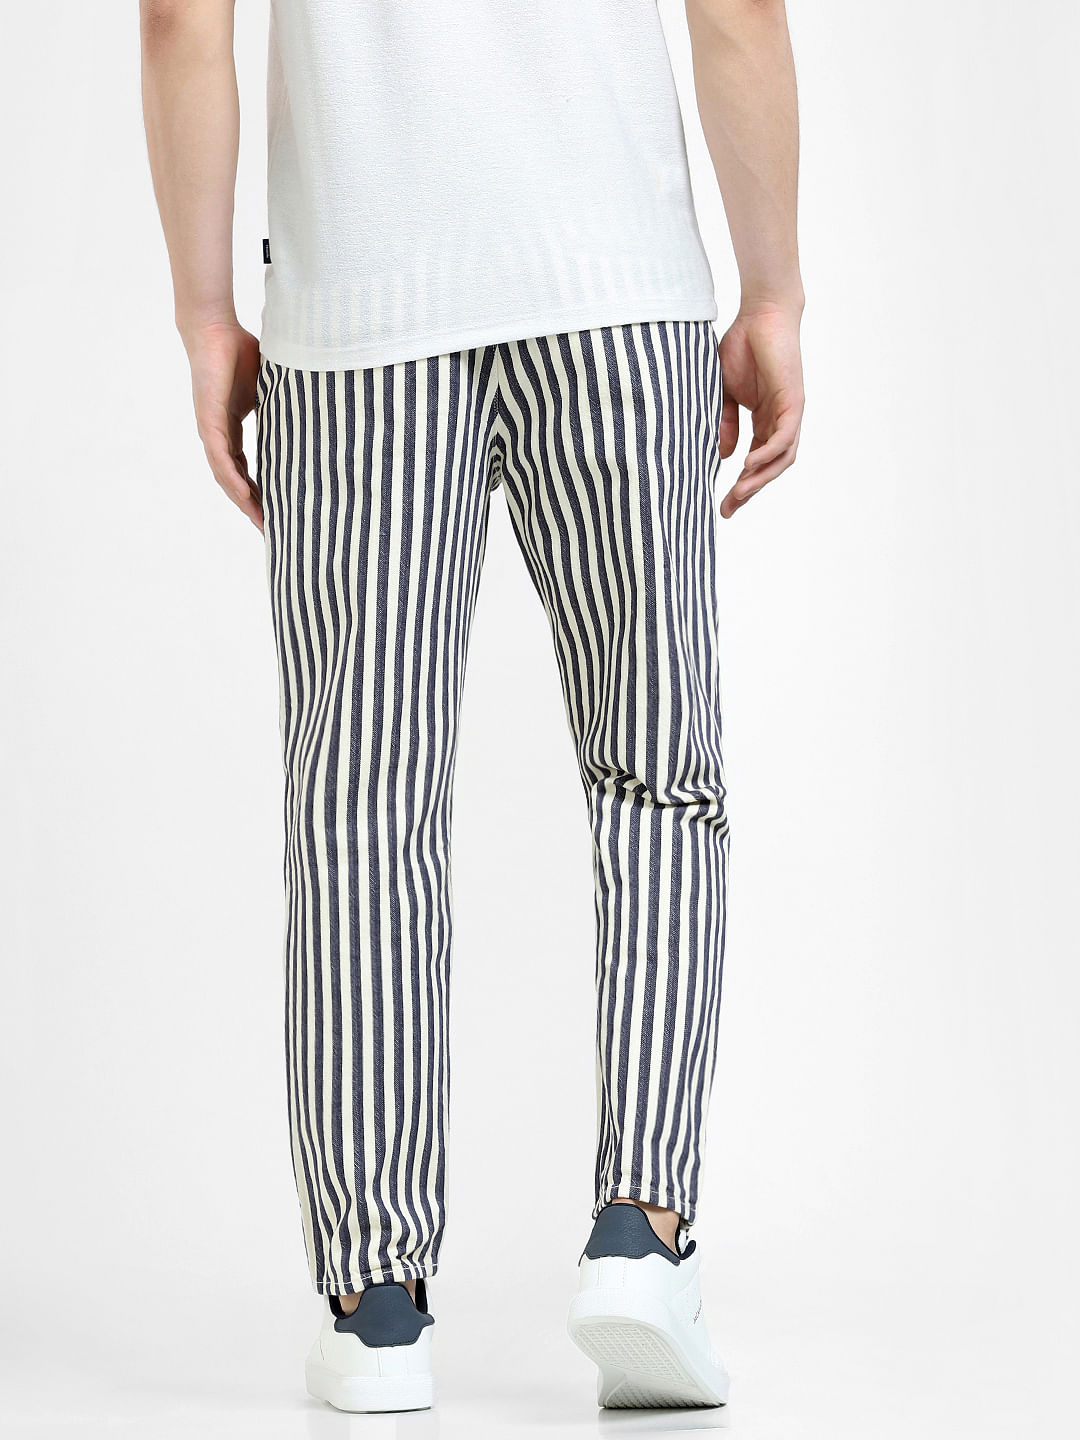 Buy White  Black Trousers  Pants for Men by Jack  Jones Online  Ajiocom